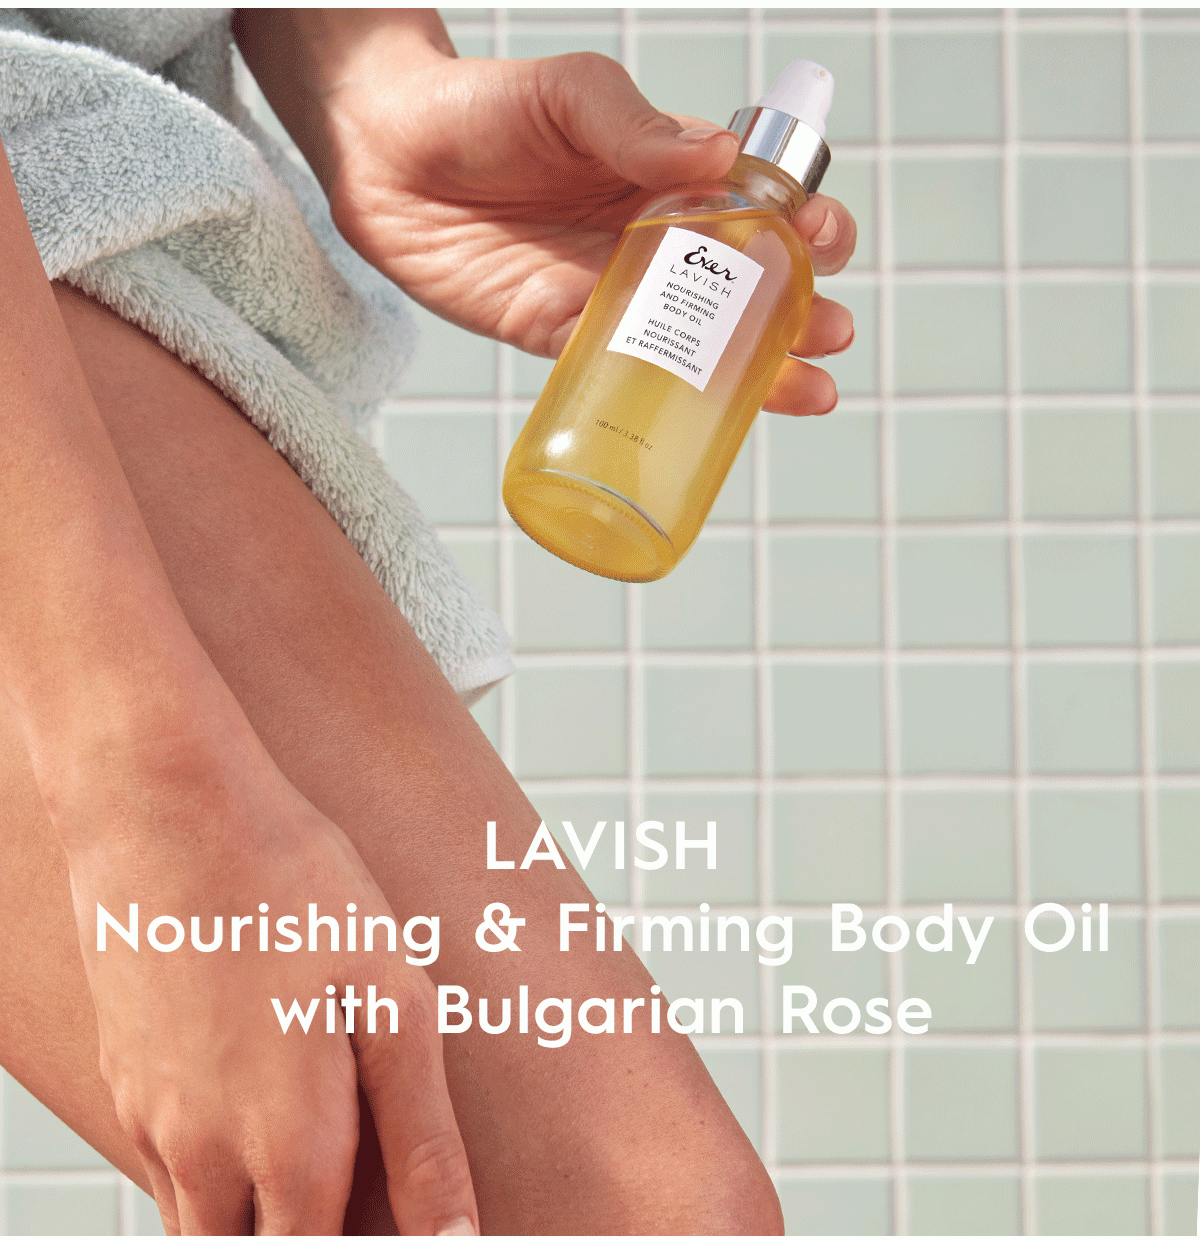 LAVISH Nourishing & Firming Body Oil with Bulgarian Rose